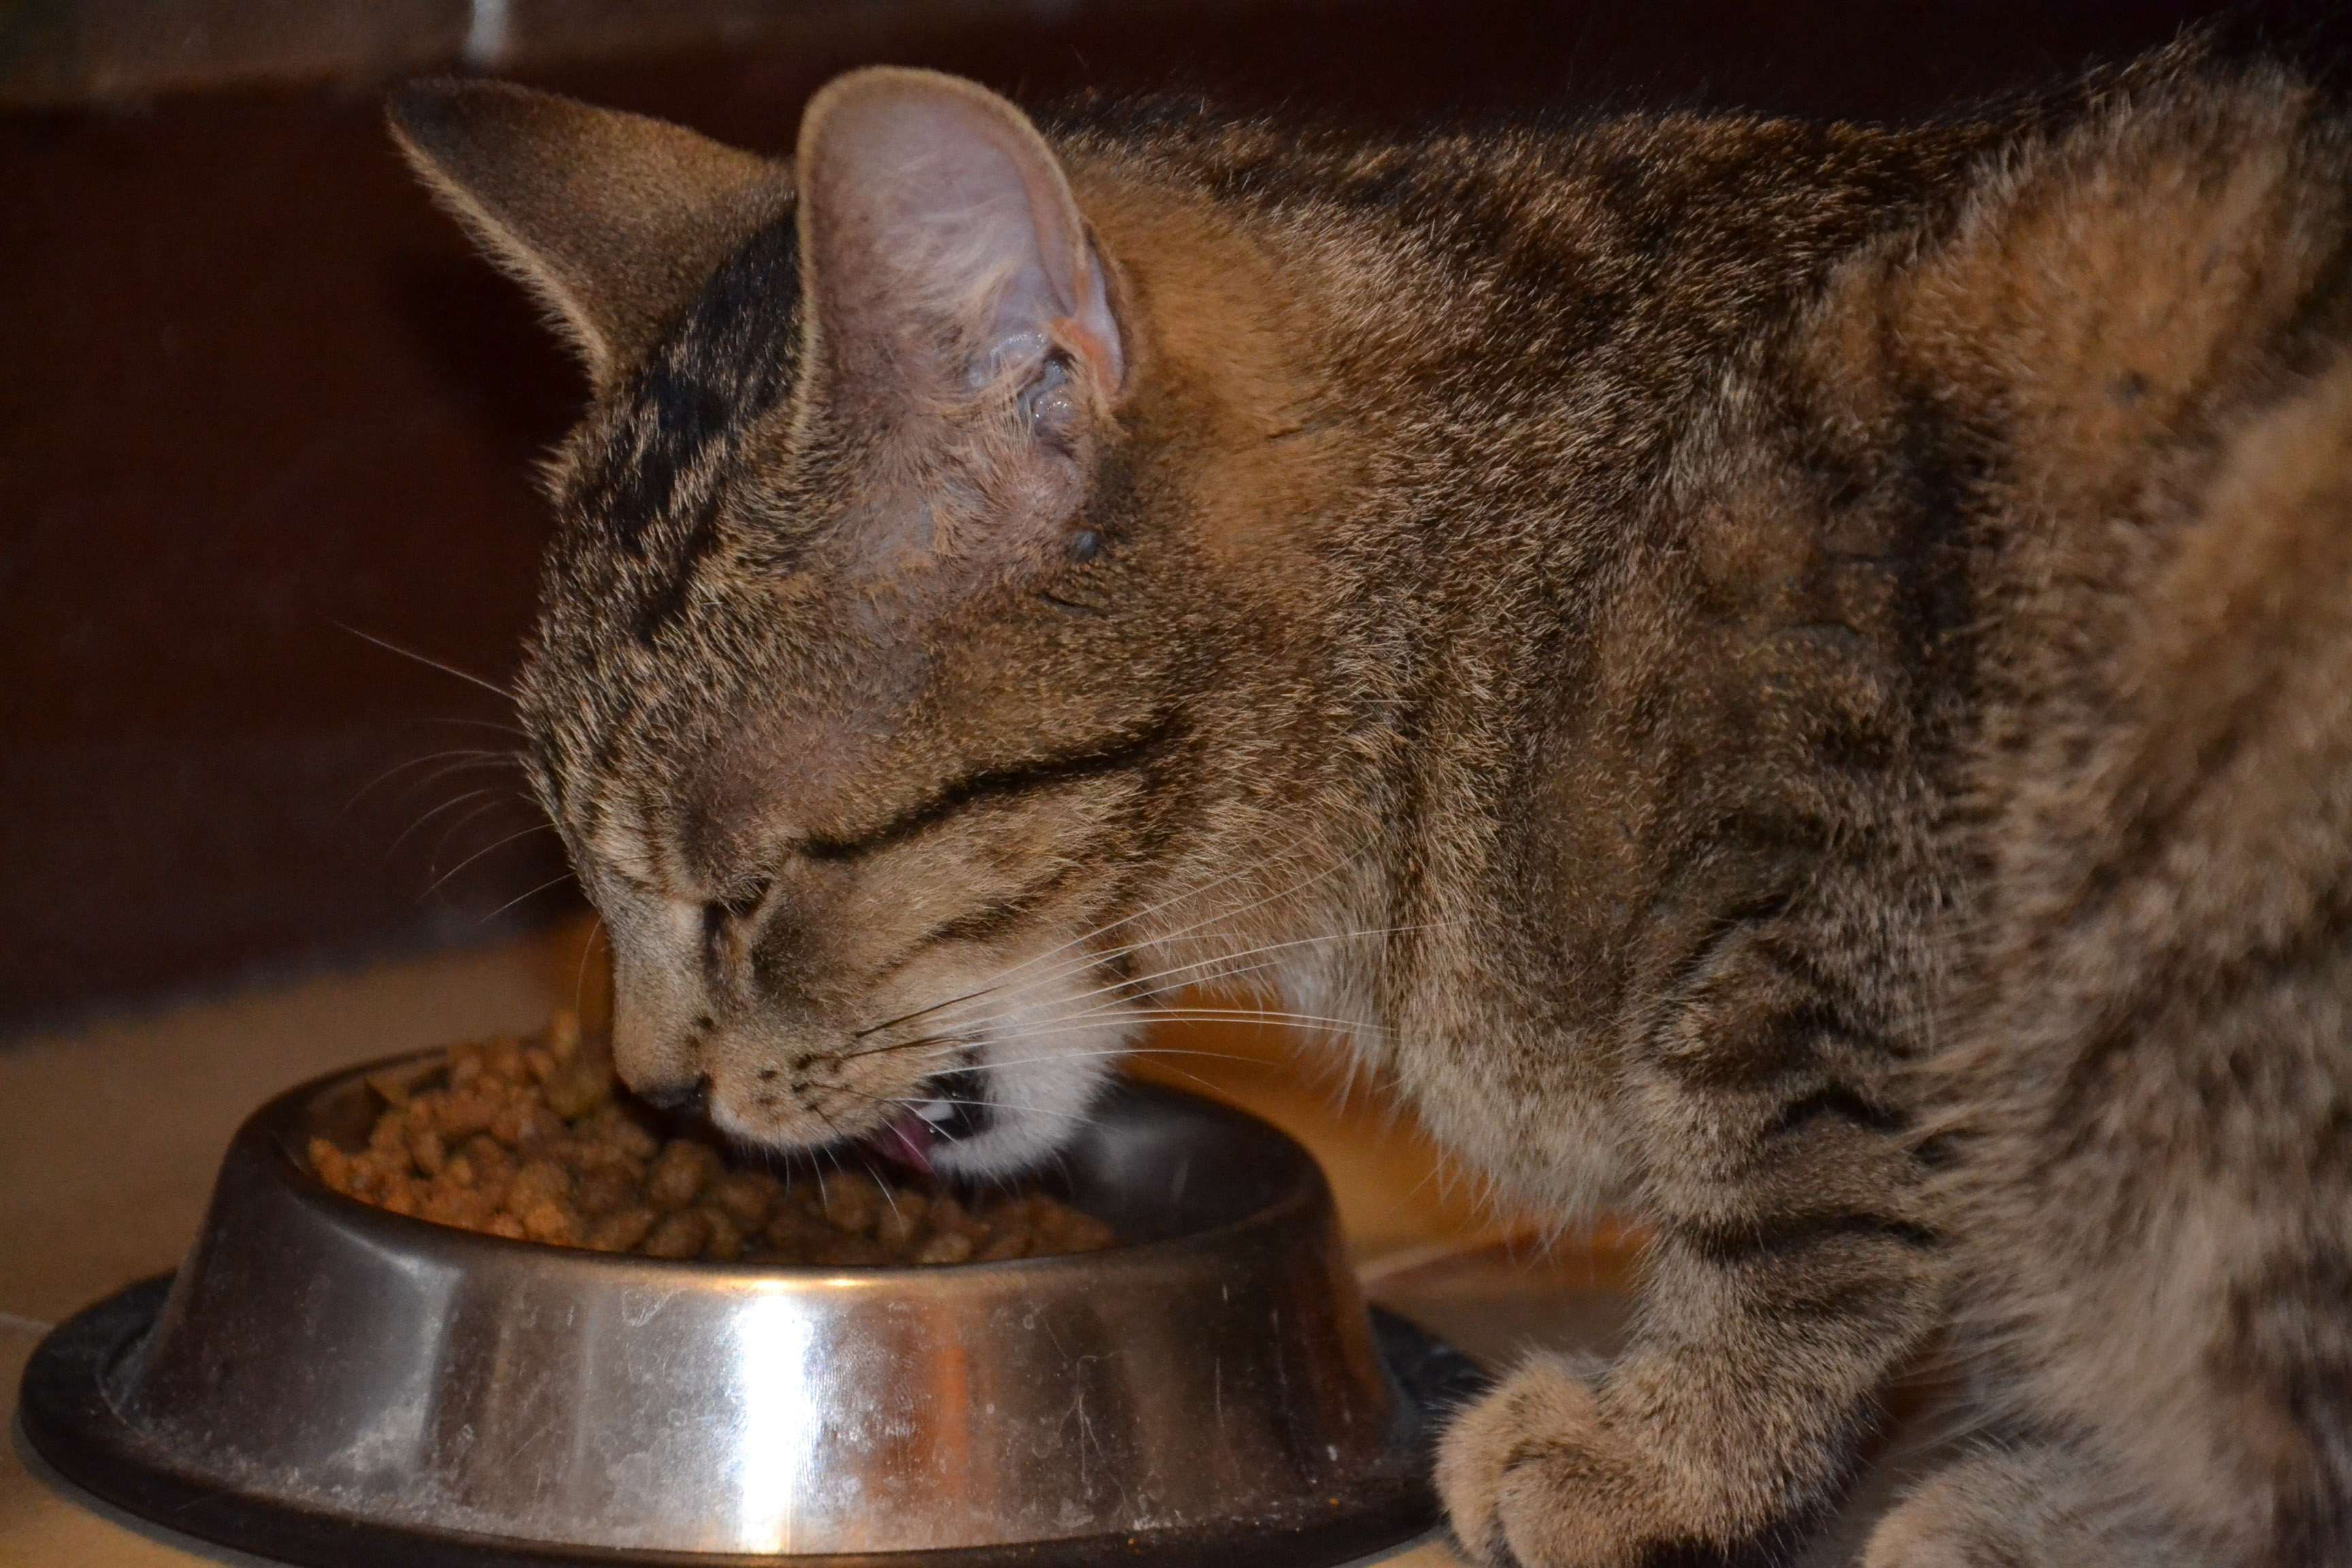 Cat Eating Cat food image - Free stock photo - Public Domain photo ...